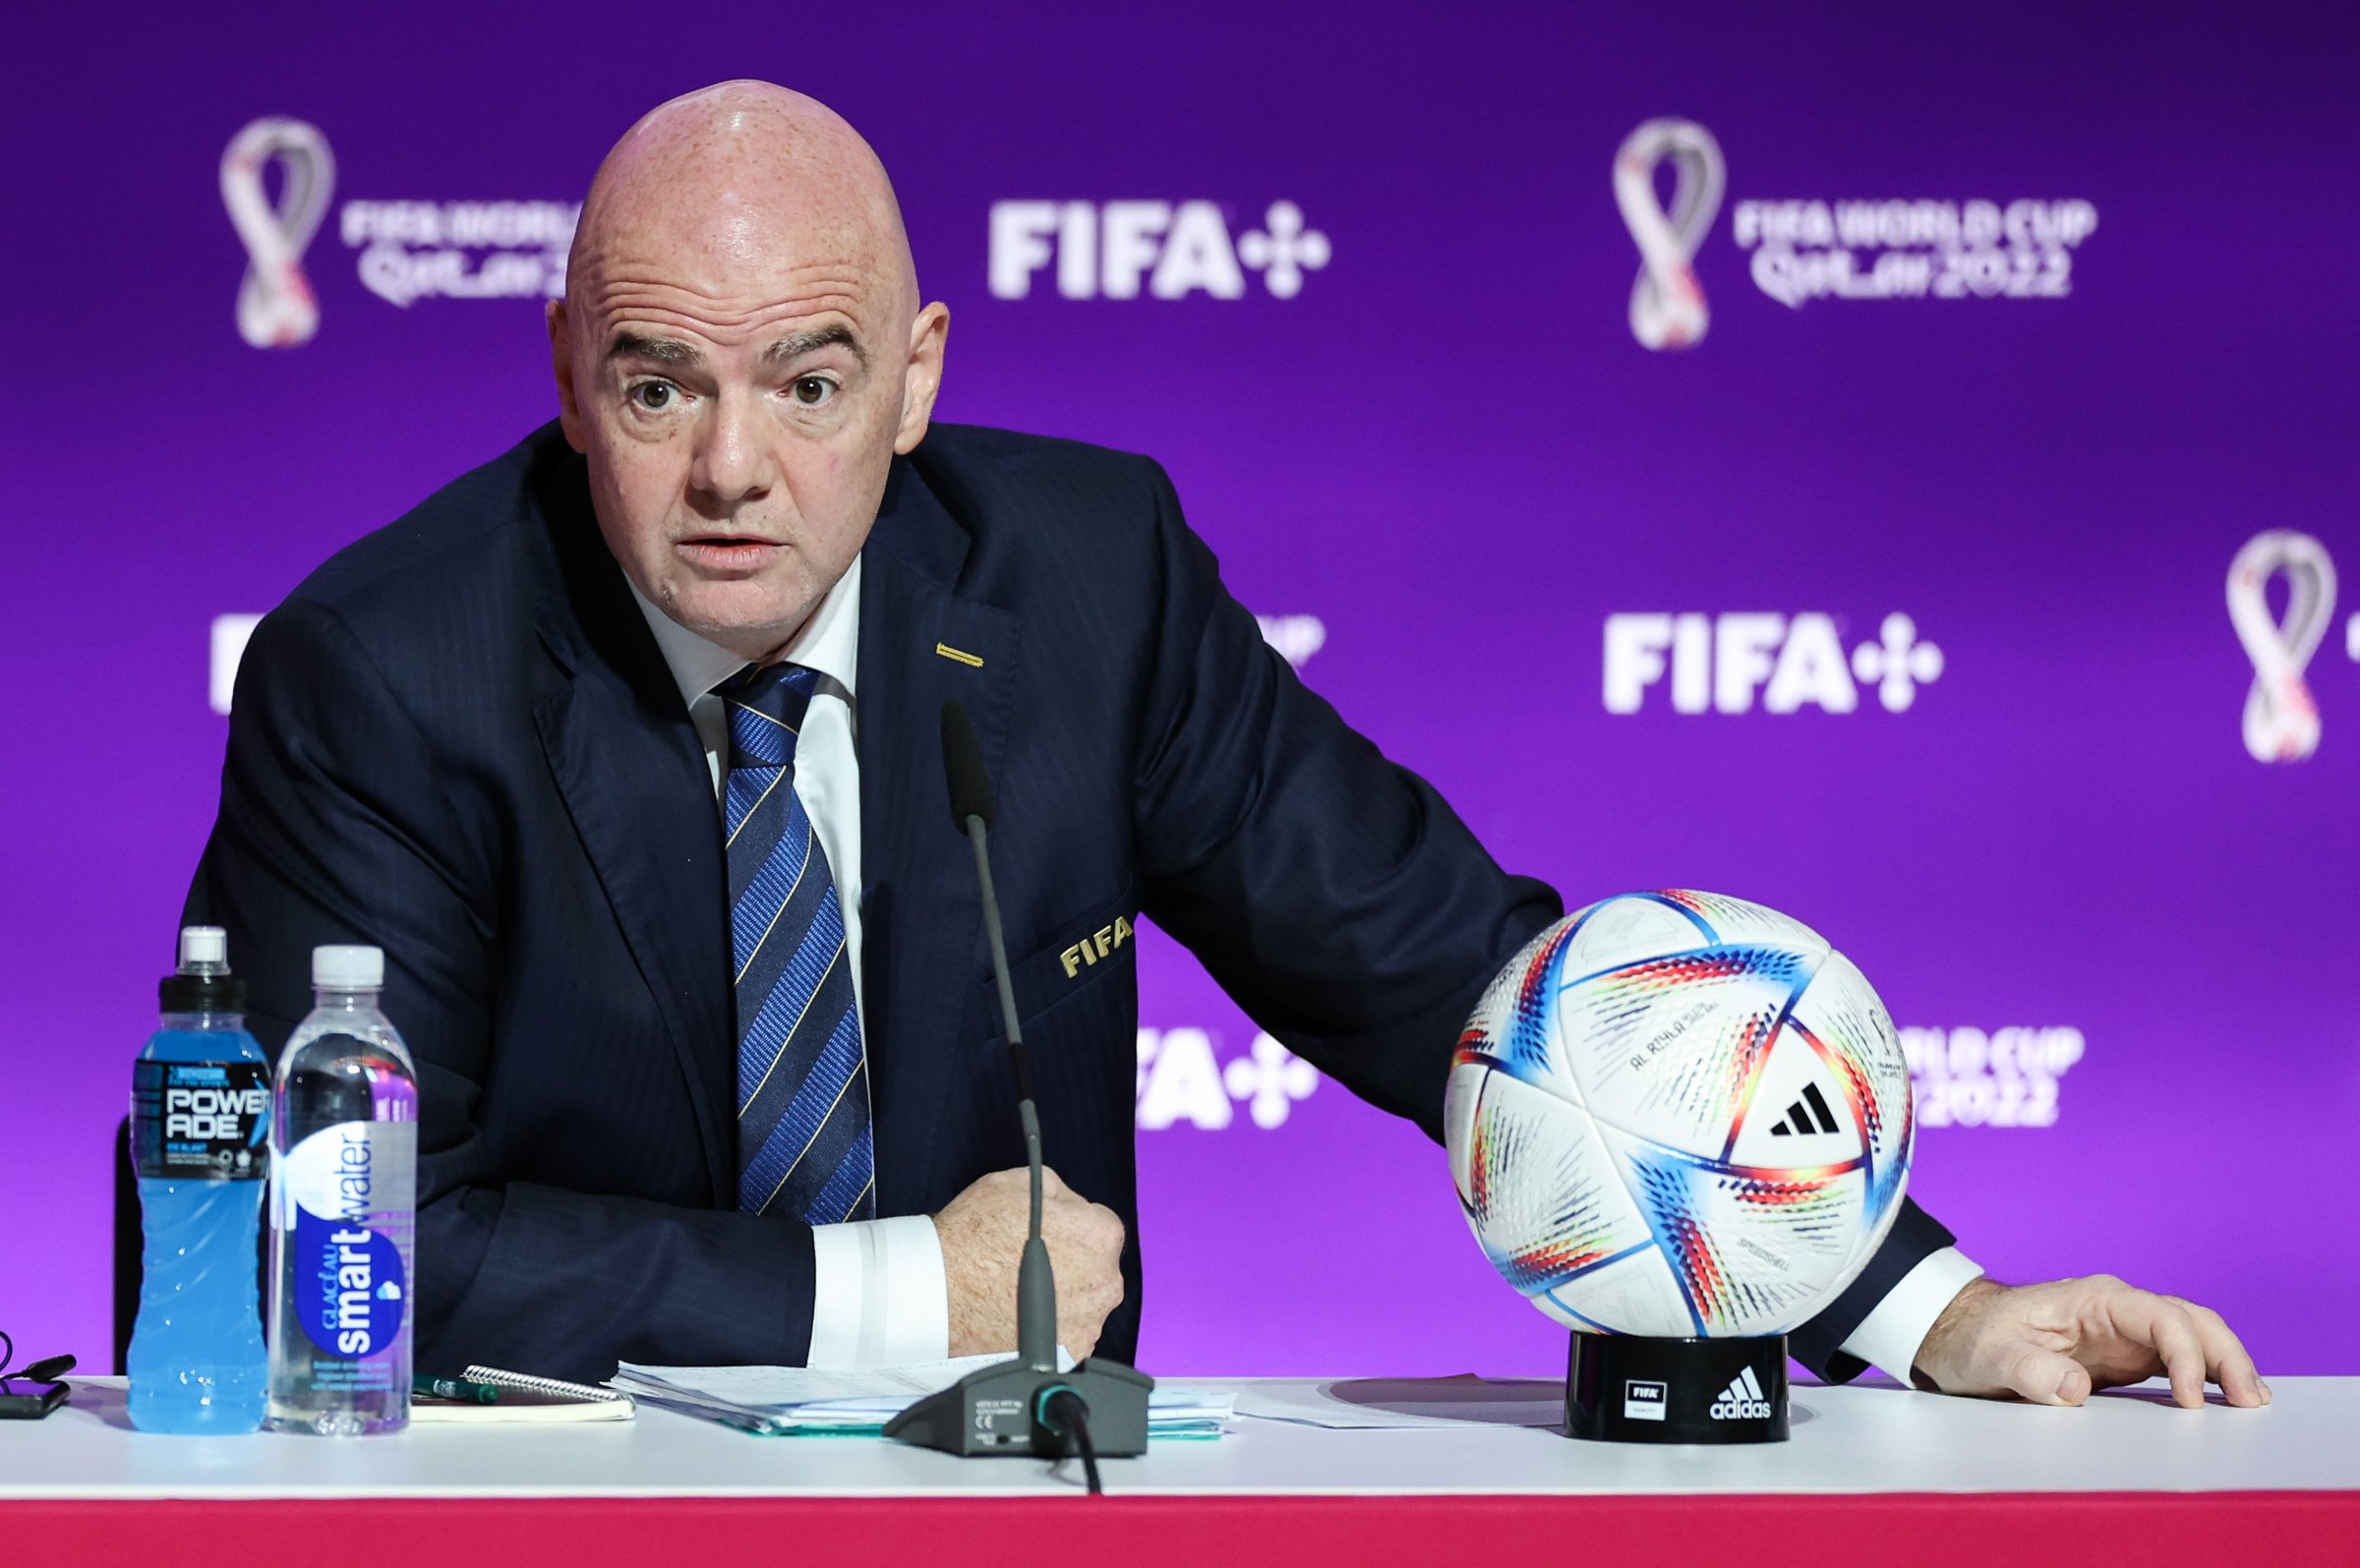 FIFA President Press Conference - FIFA World Cup Qatar 2022